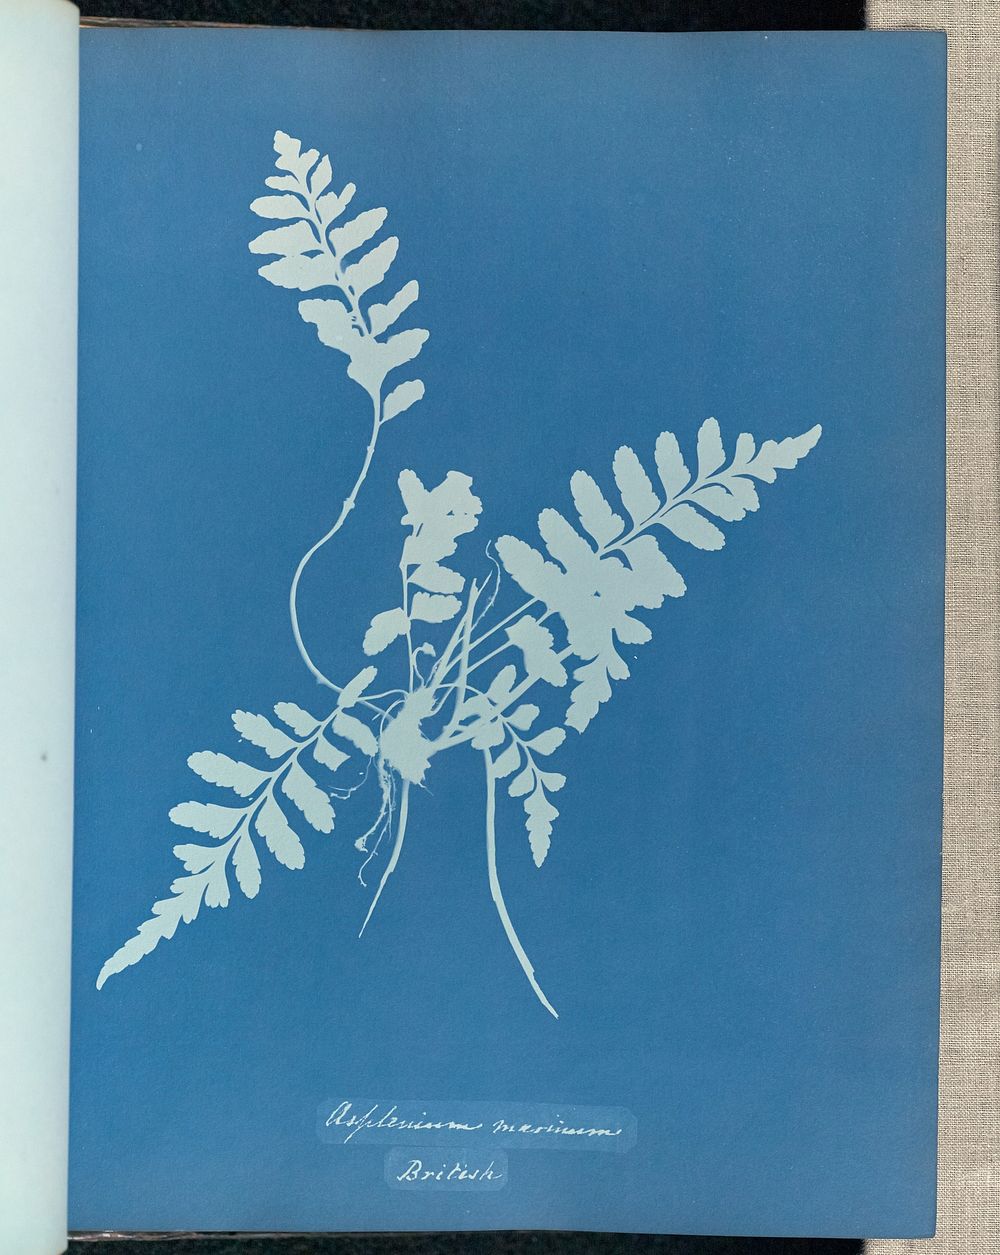 Asplenium marinum, British by Anna Atkins and Anne Dixon